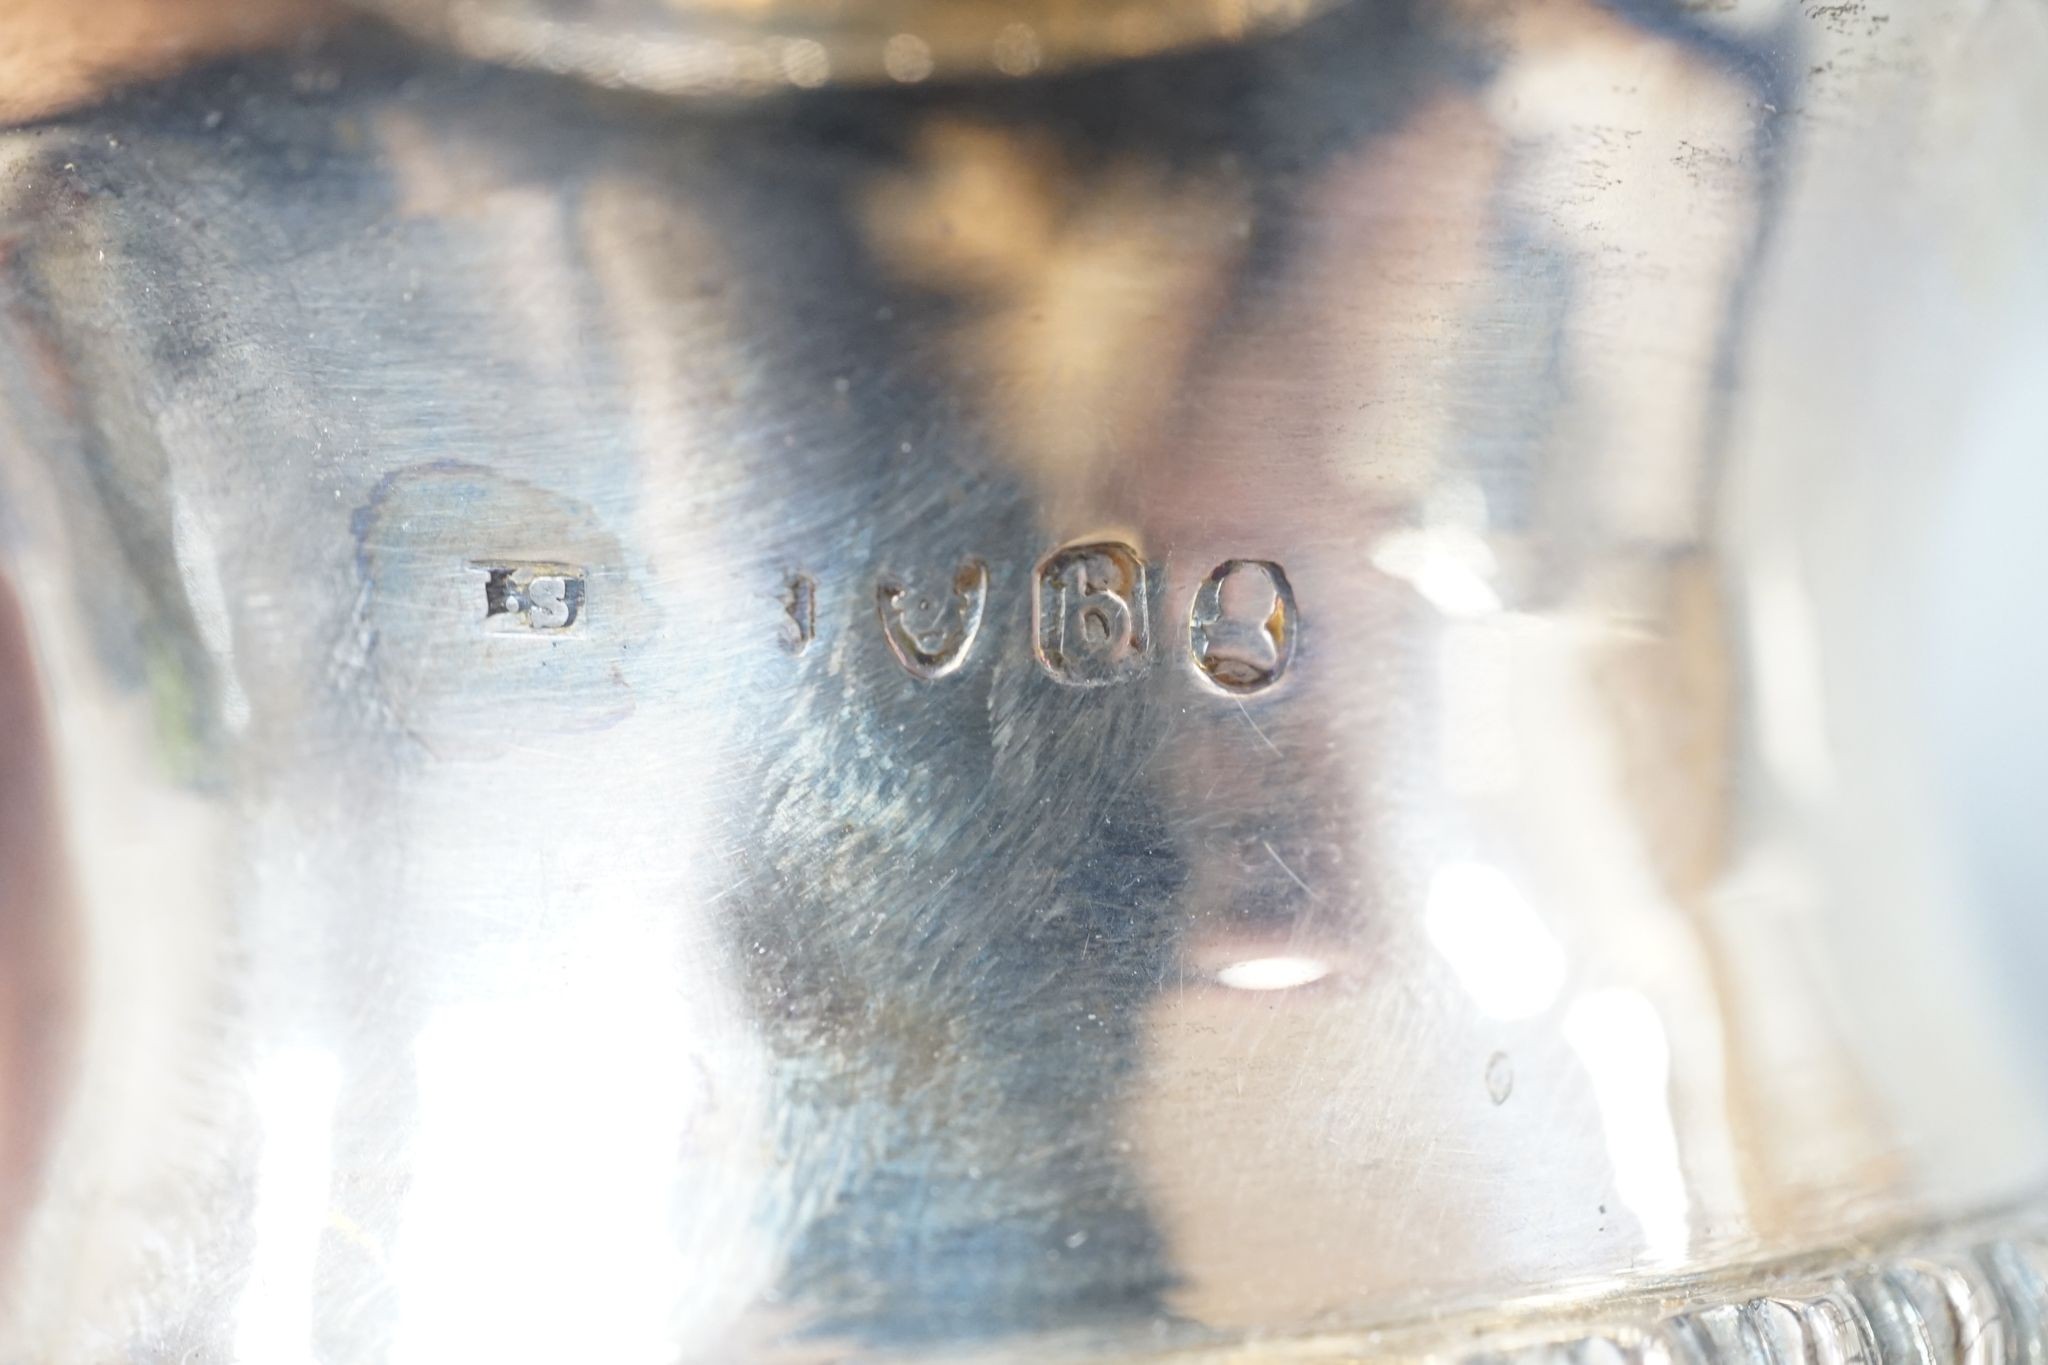 A late George III silver cream jug, J.S?, London, 1817, 10.2cm, 6.5oz.